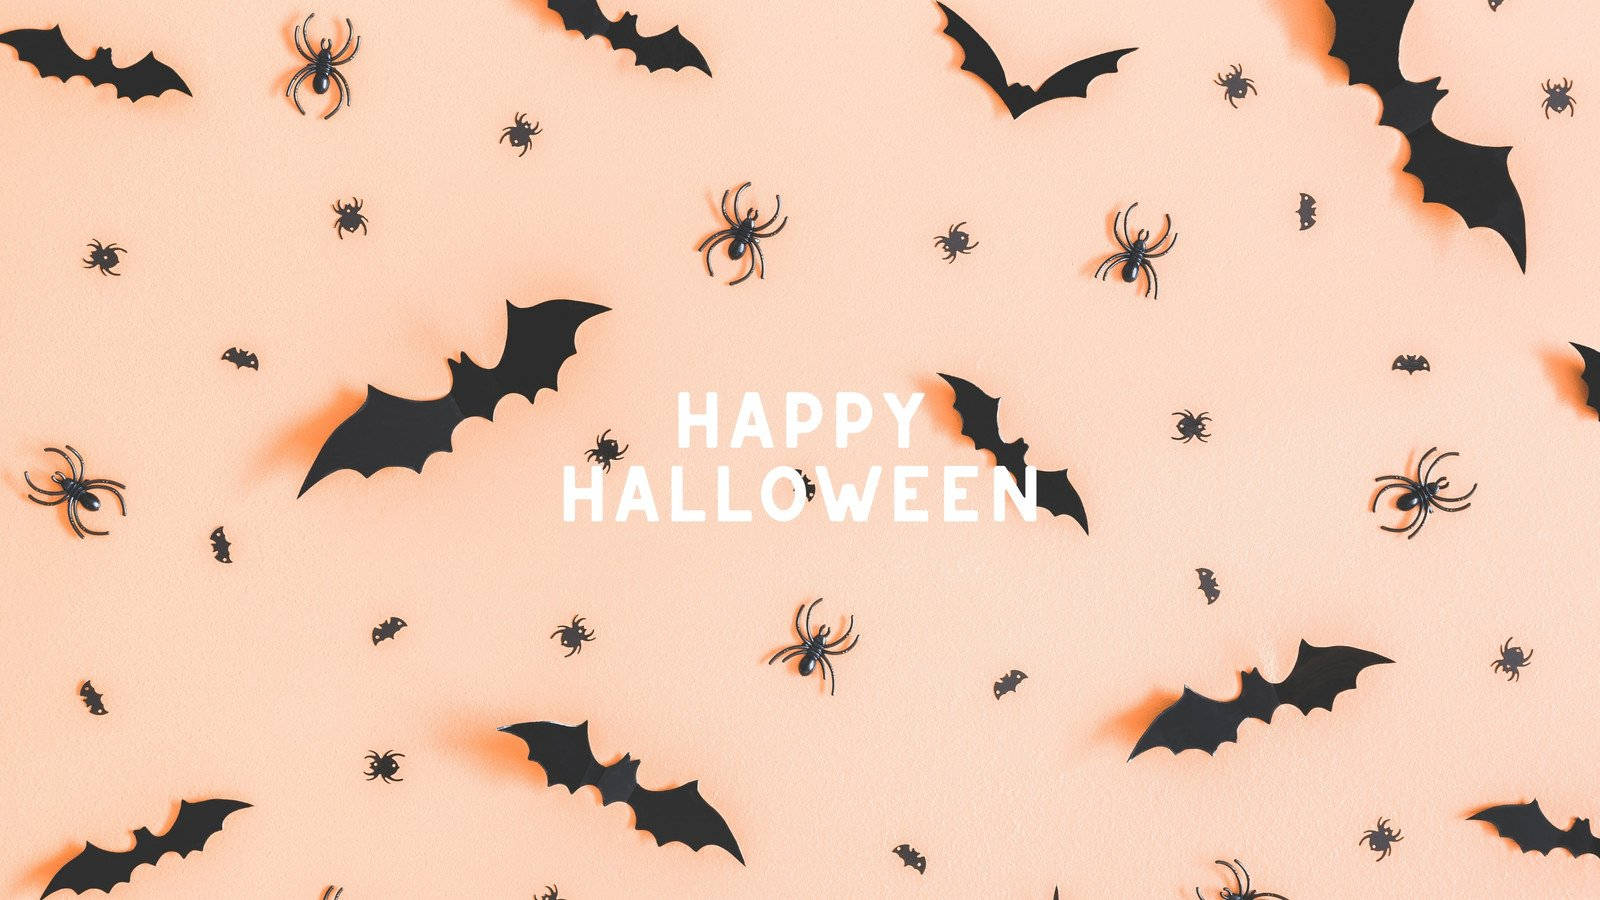 Get into the spooky spirit this season! Wallpaper